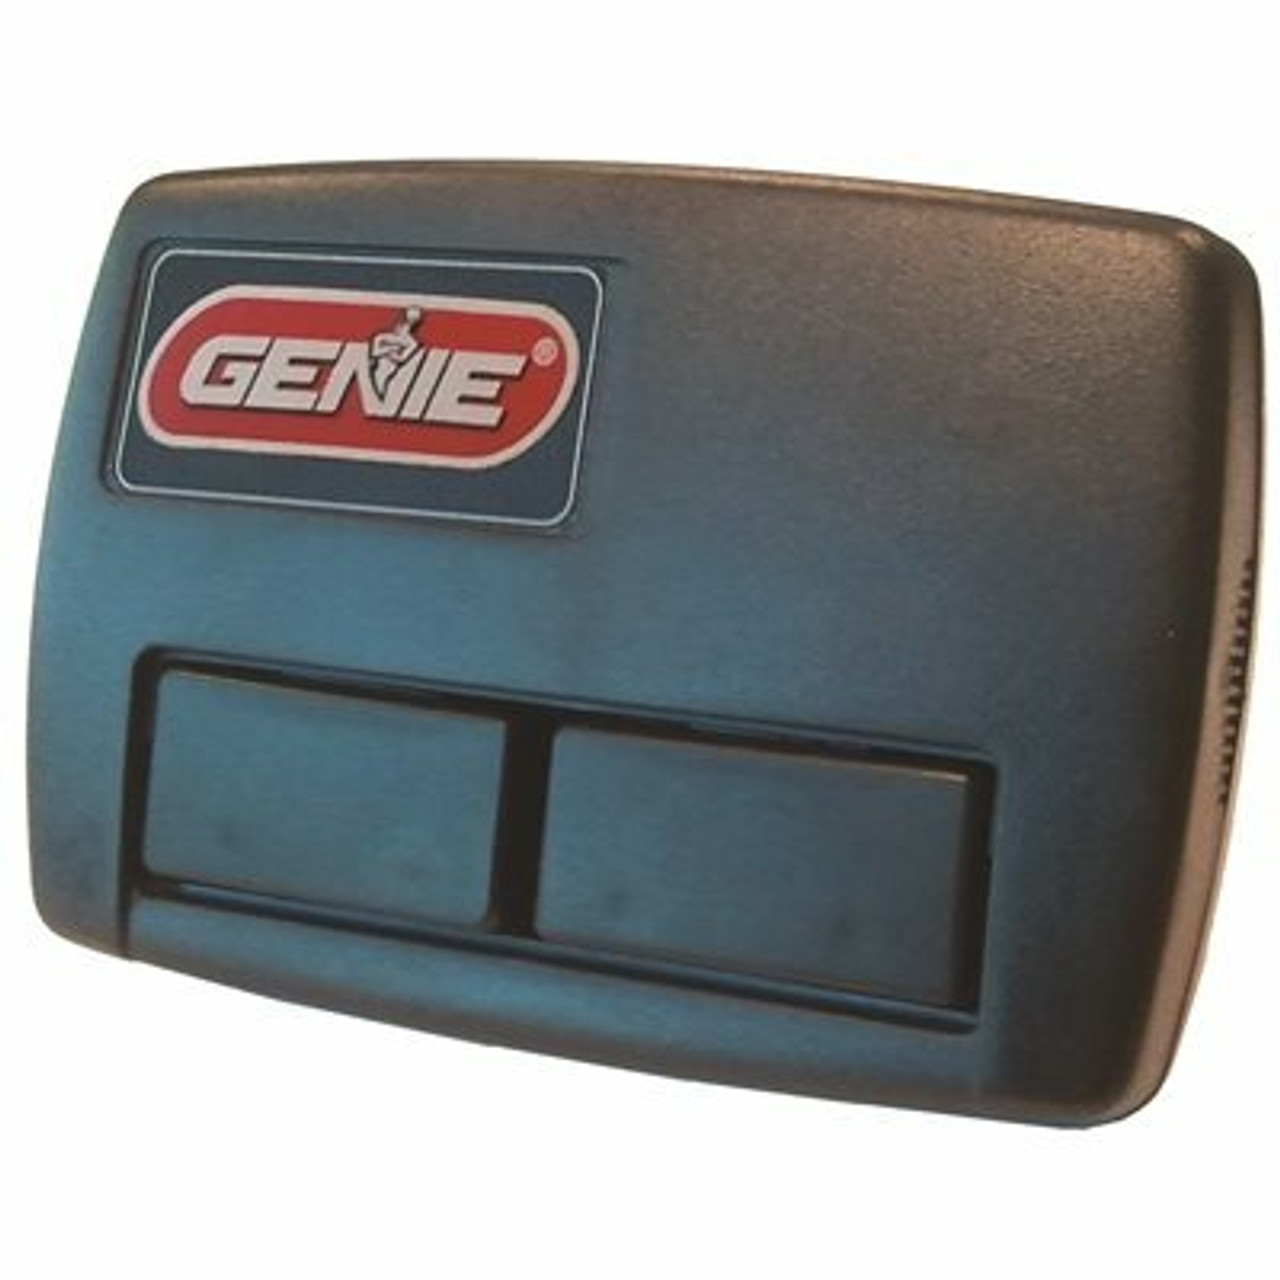 Genie Gidfx2.S Remote